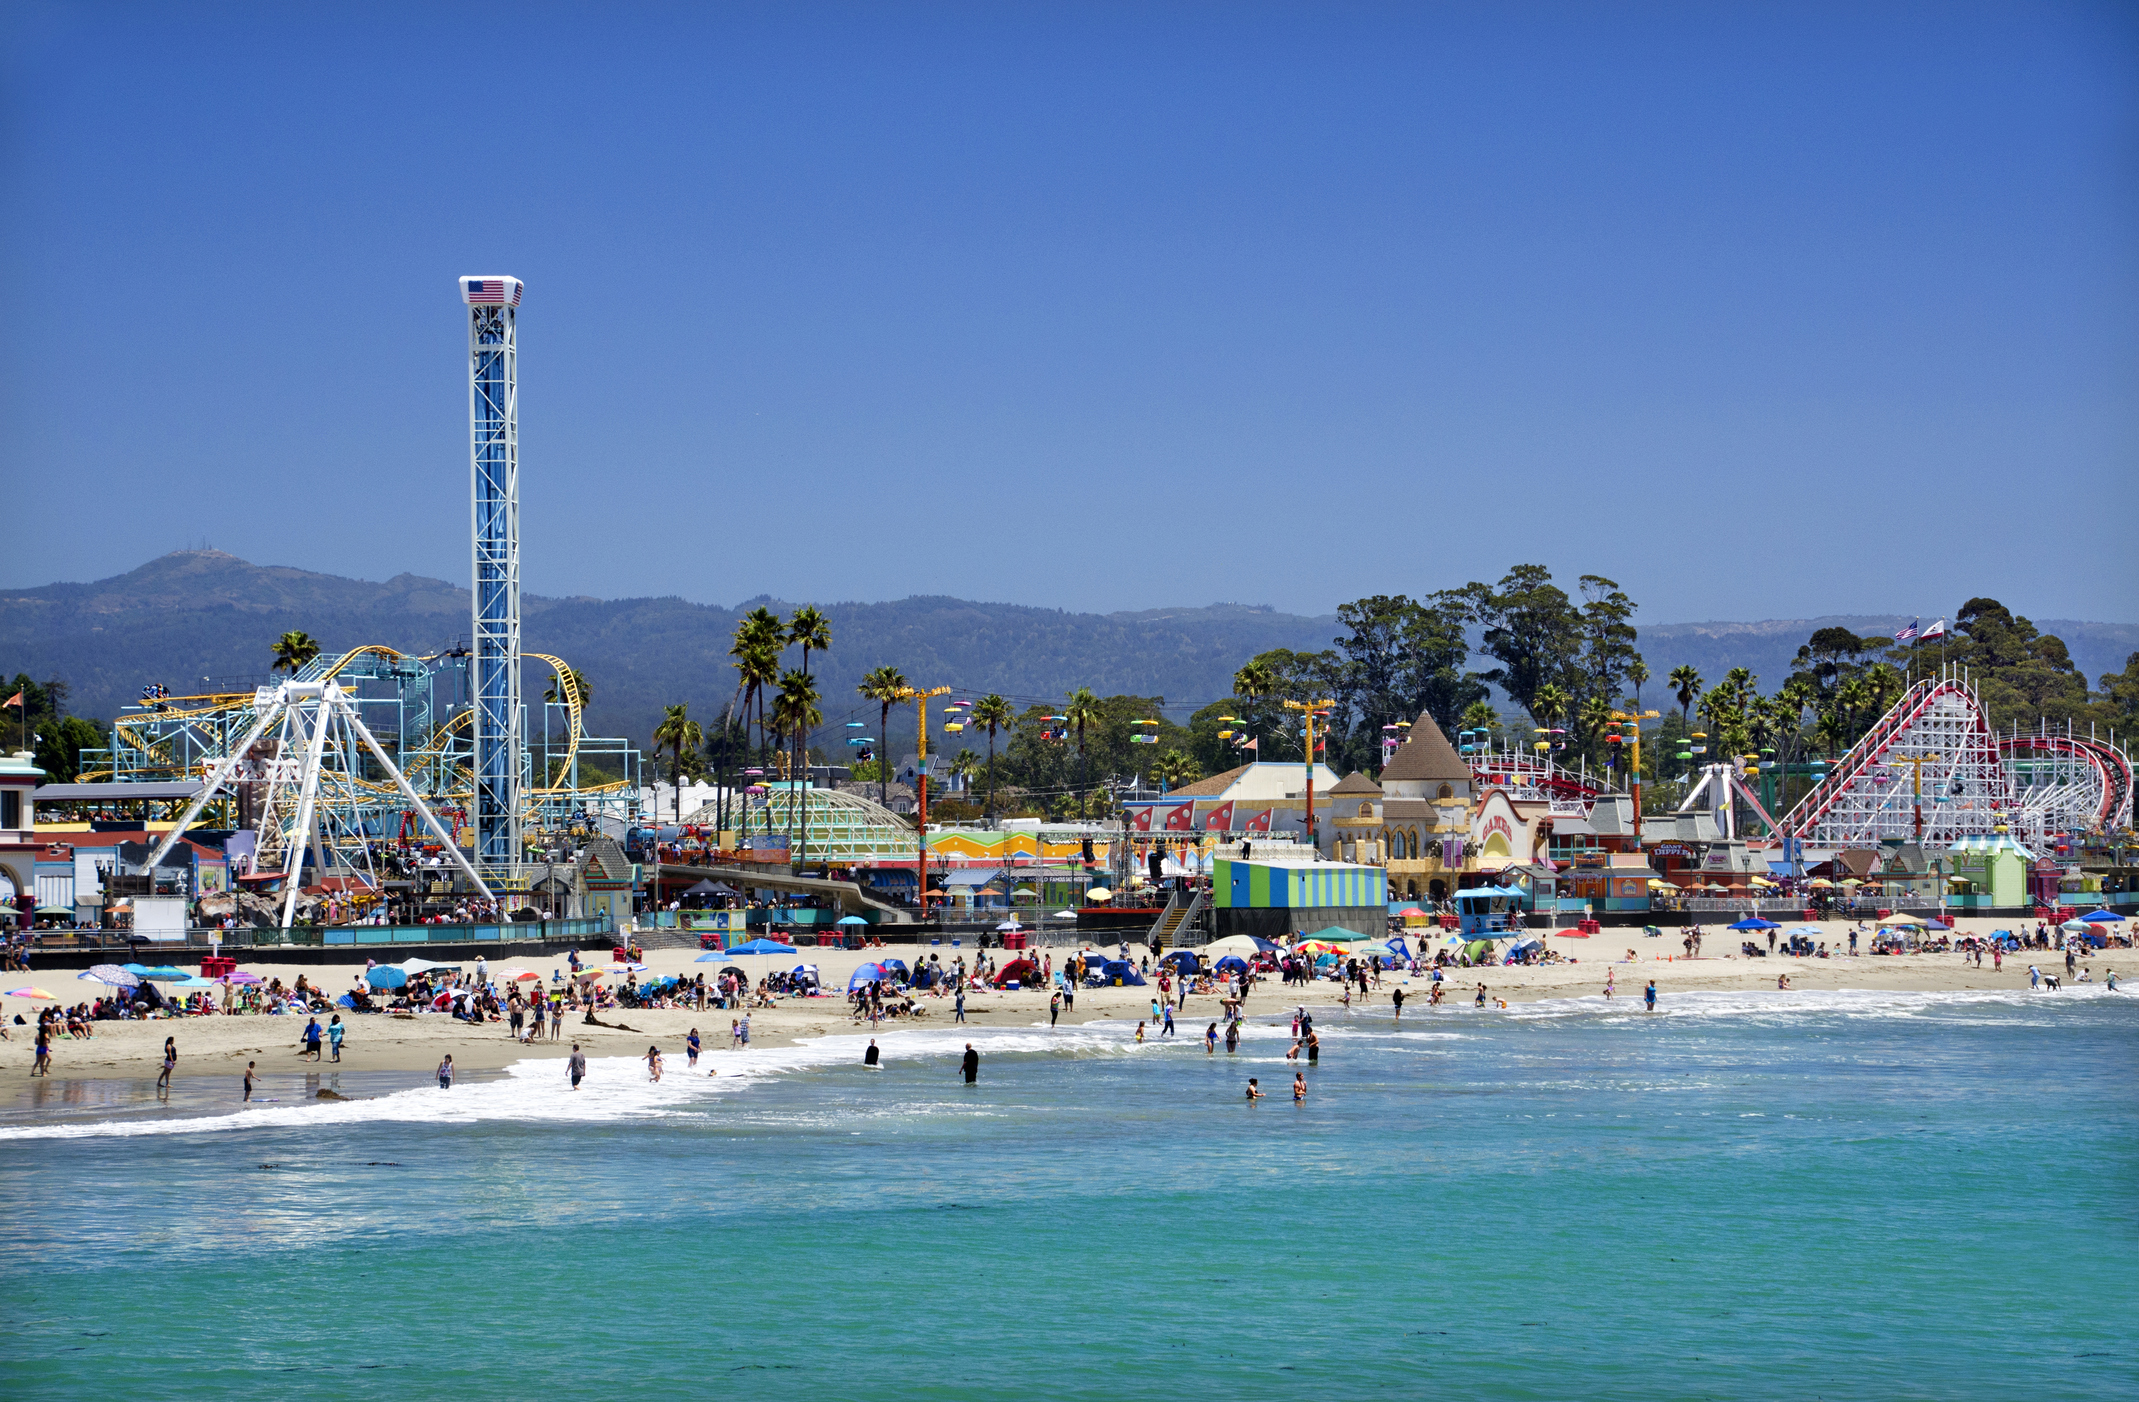  Santa Cruz beach boardwalk amusement park